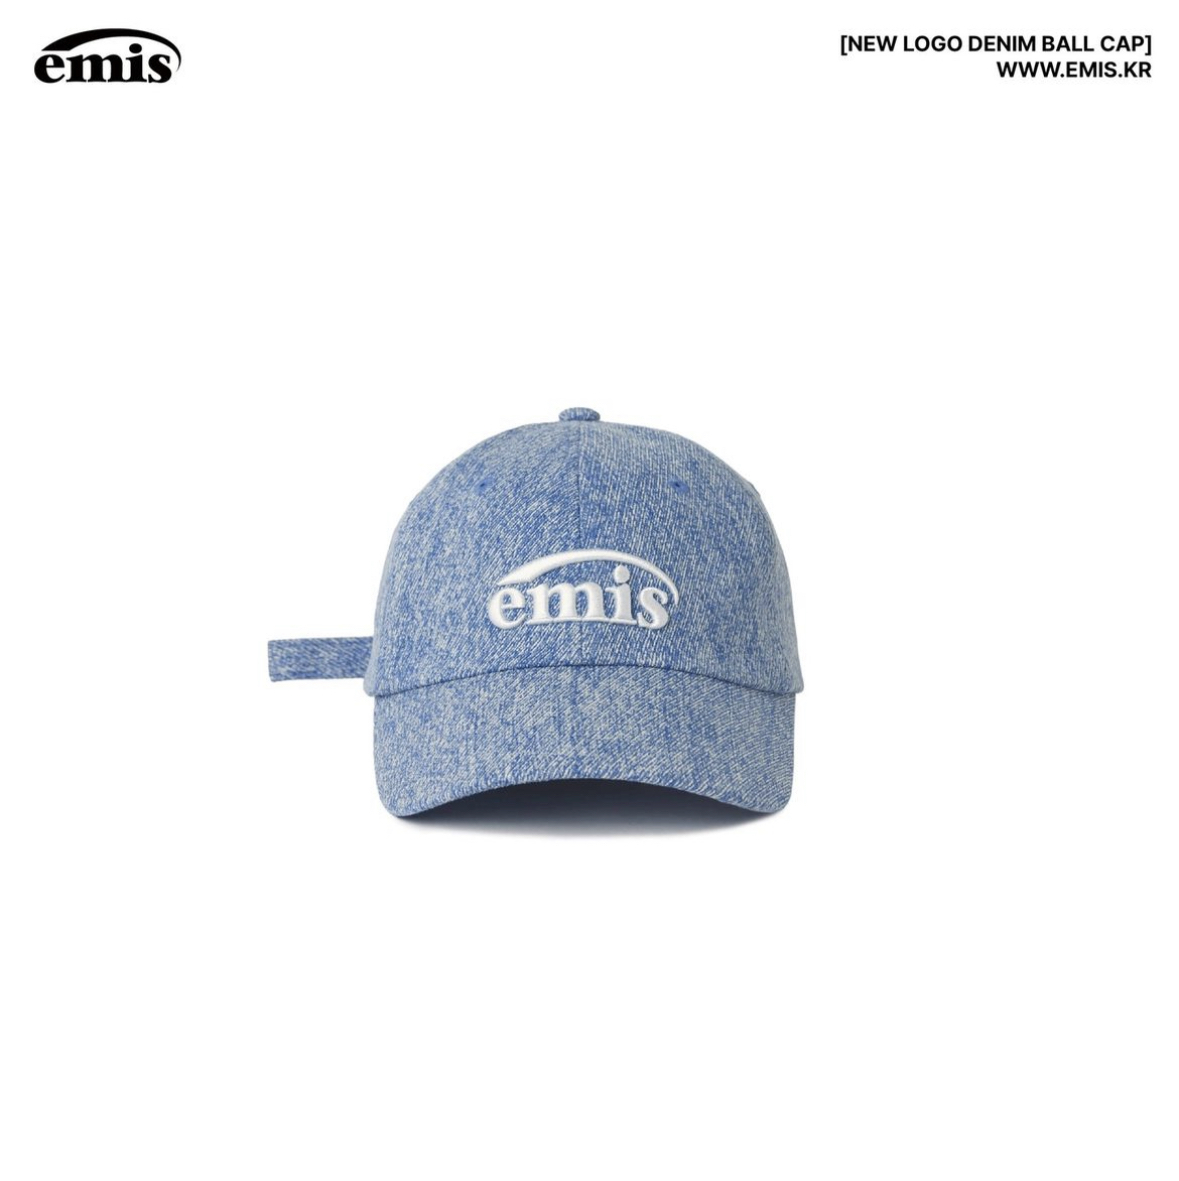 韓國EMIS NEW LOGO DENIM BALL CAP